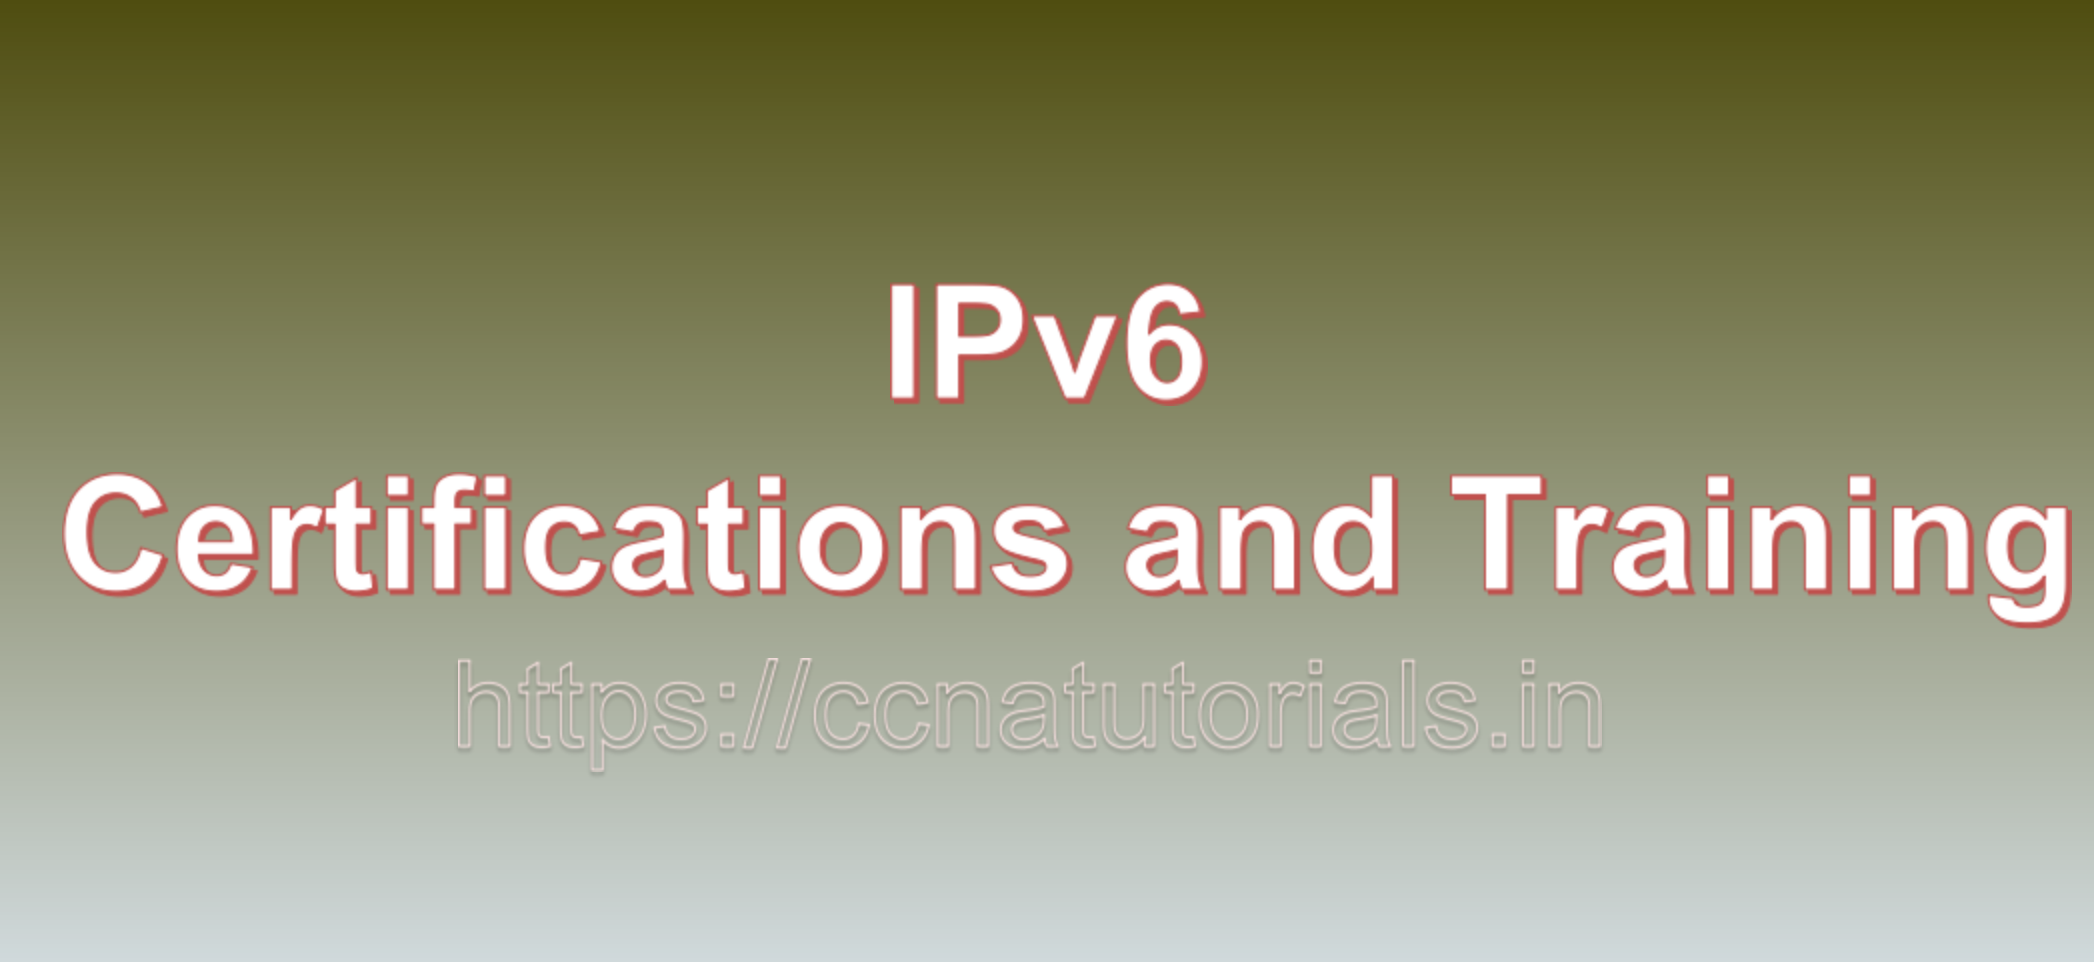 IPv6 Certifications and Training, ccna, ccna tutorials